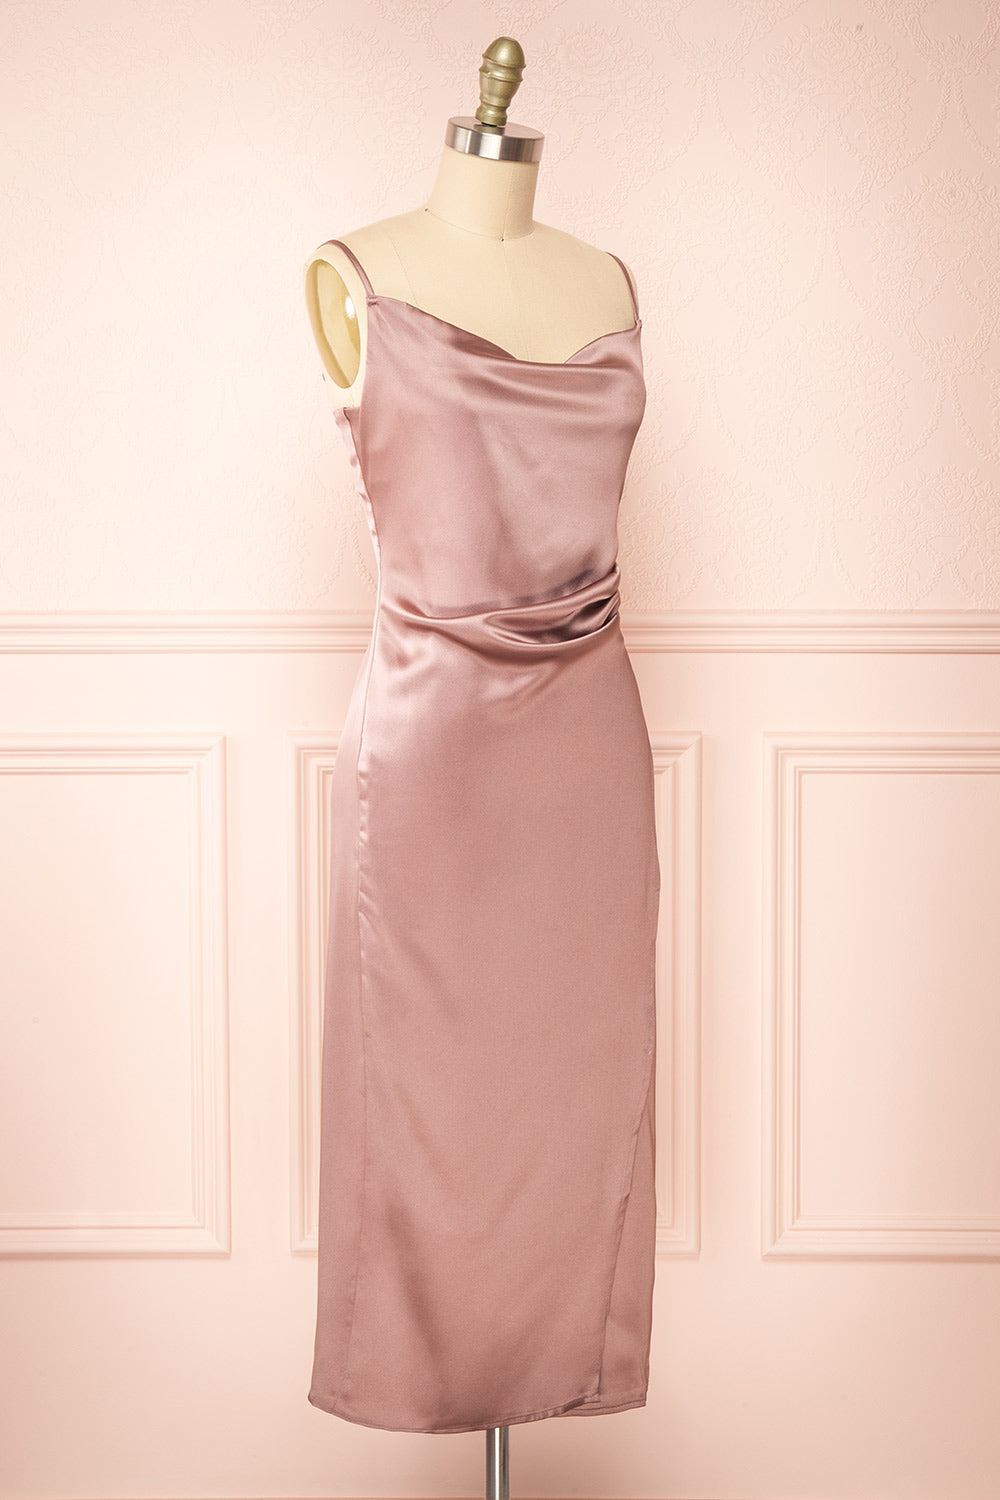 Chloe Sunrise Pink Cowl Neck Silky Midi Slip Dress | Boutique 1861 side view